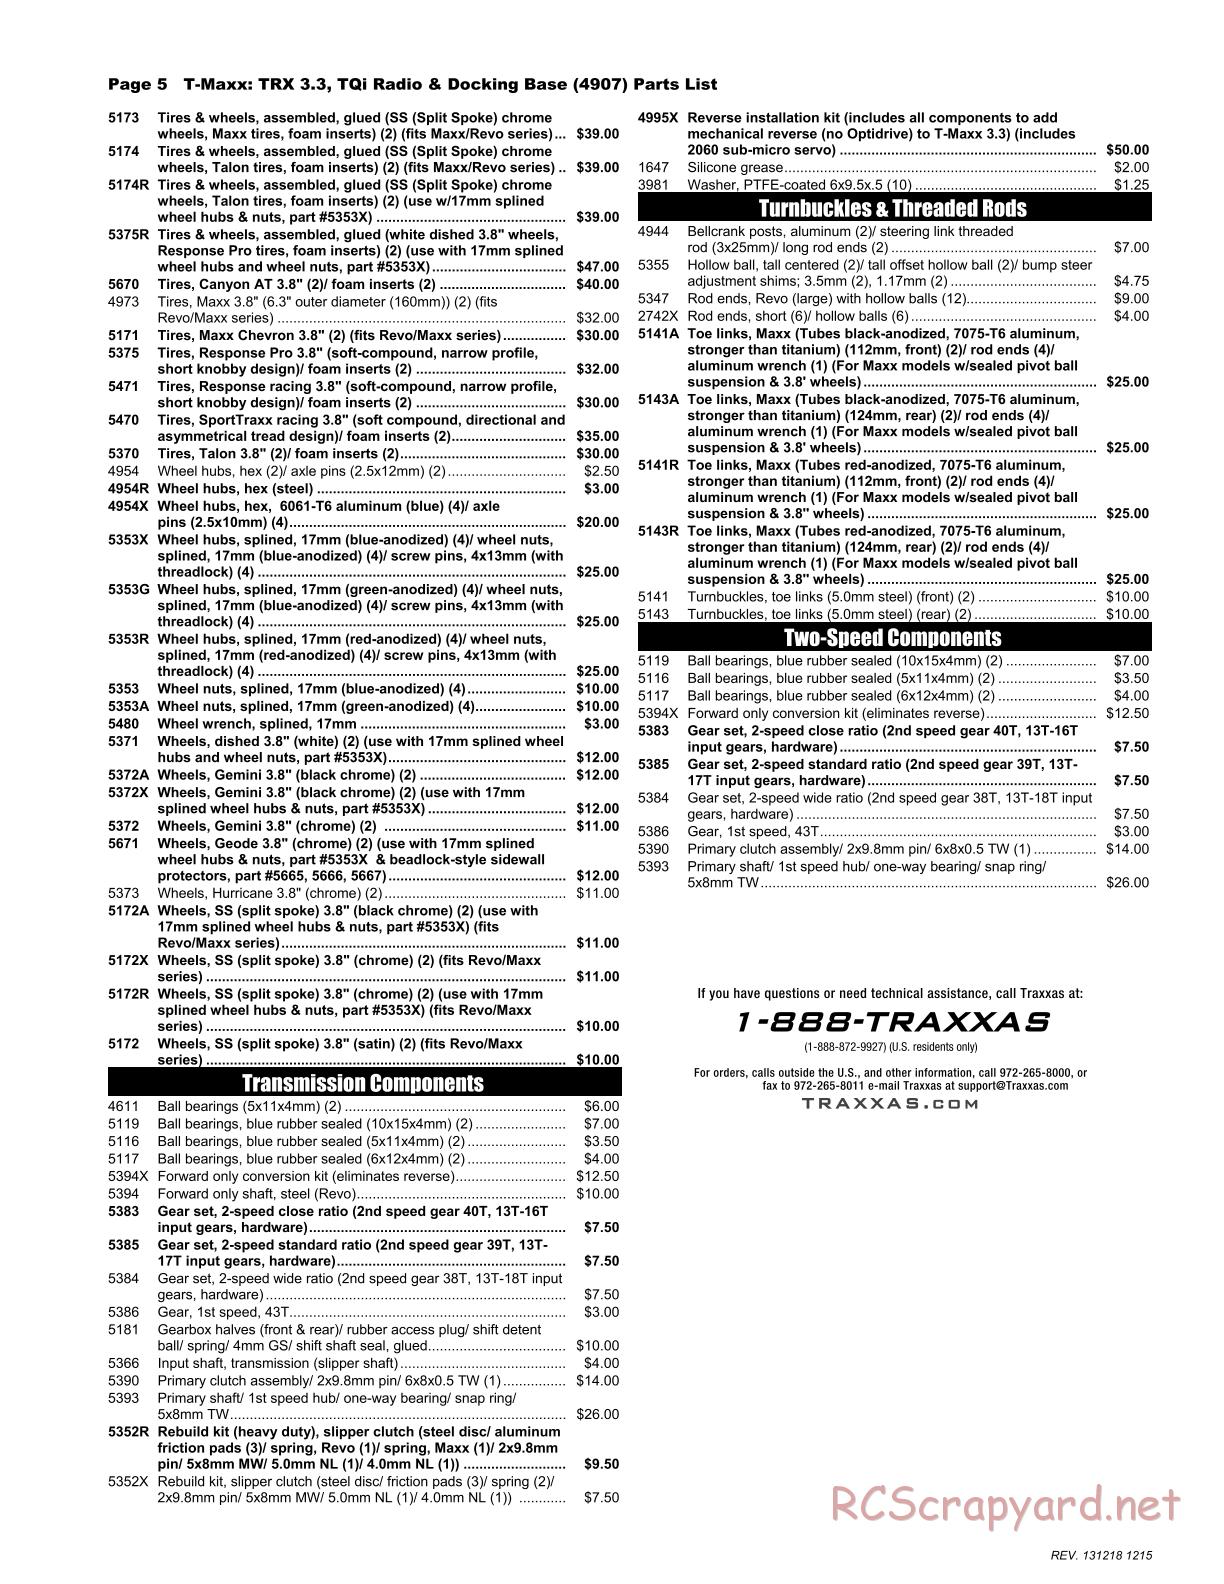 Traxxas - T-Maxx 3.3 (2010) - Parts List - Page 5